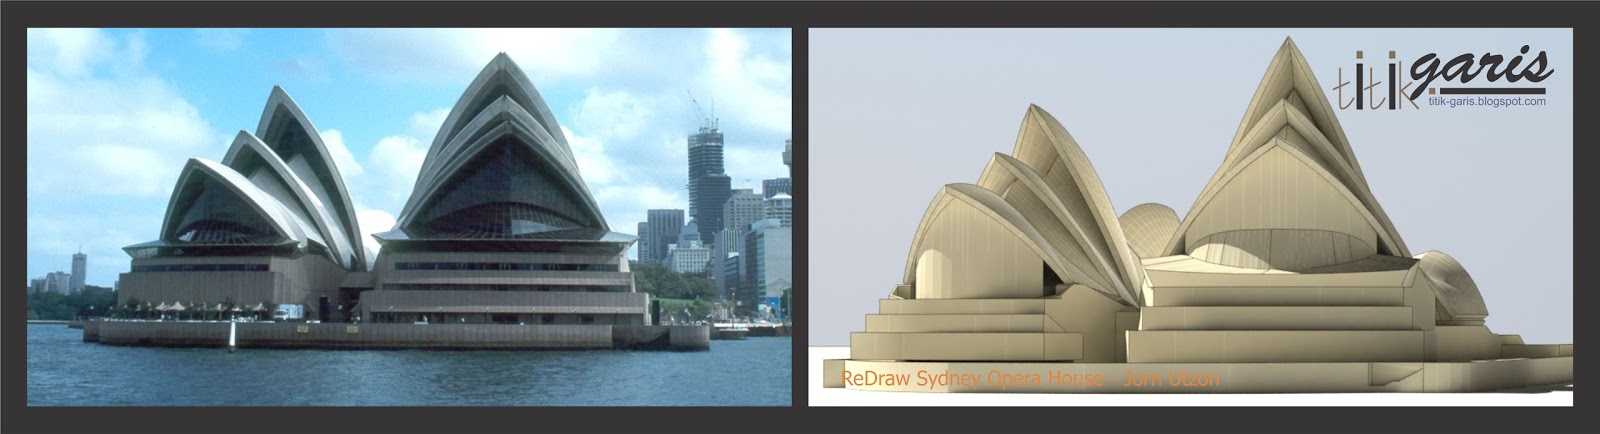 ReDrawing Sydney Opera House karya Jorn Utzon - Rumah Garis